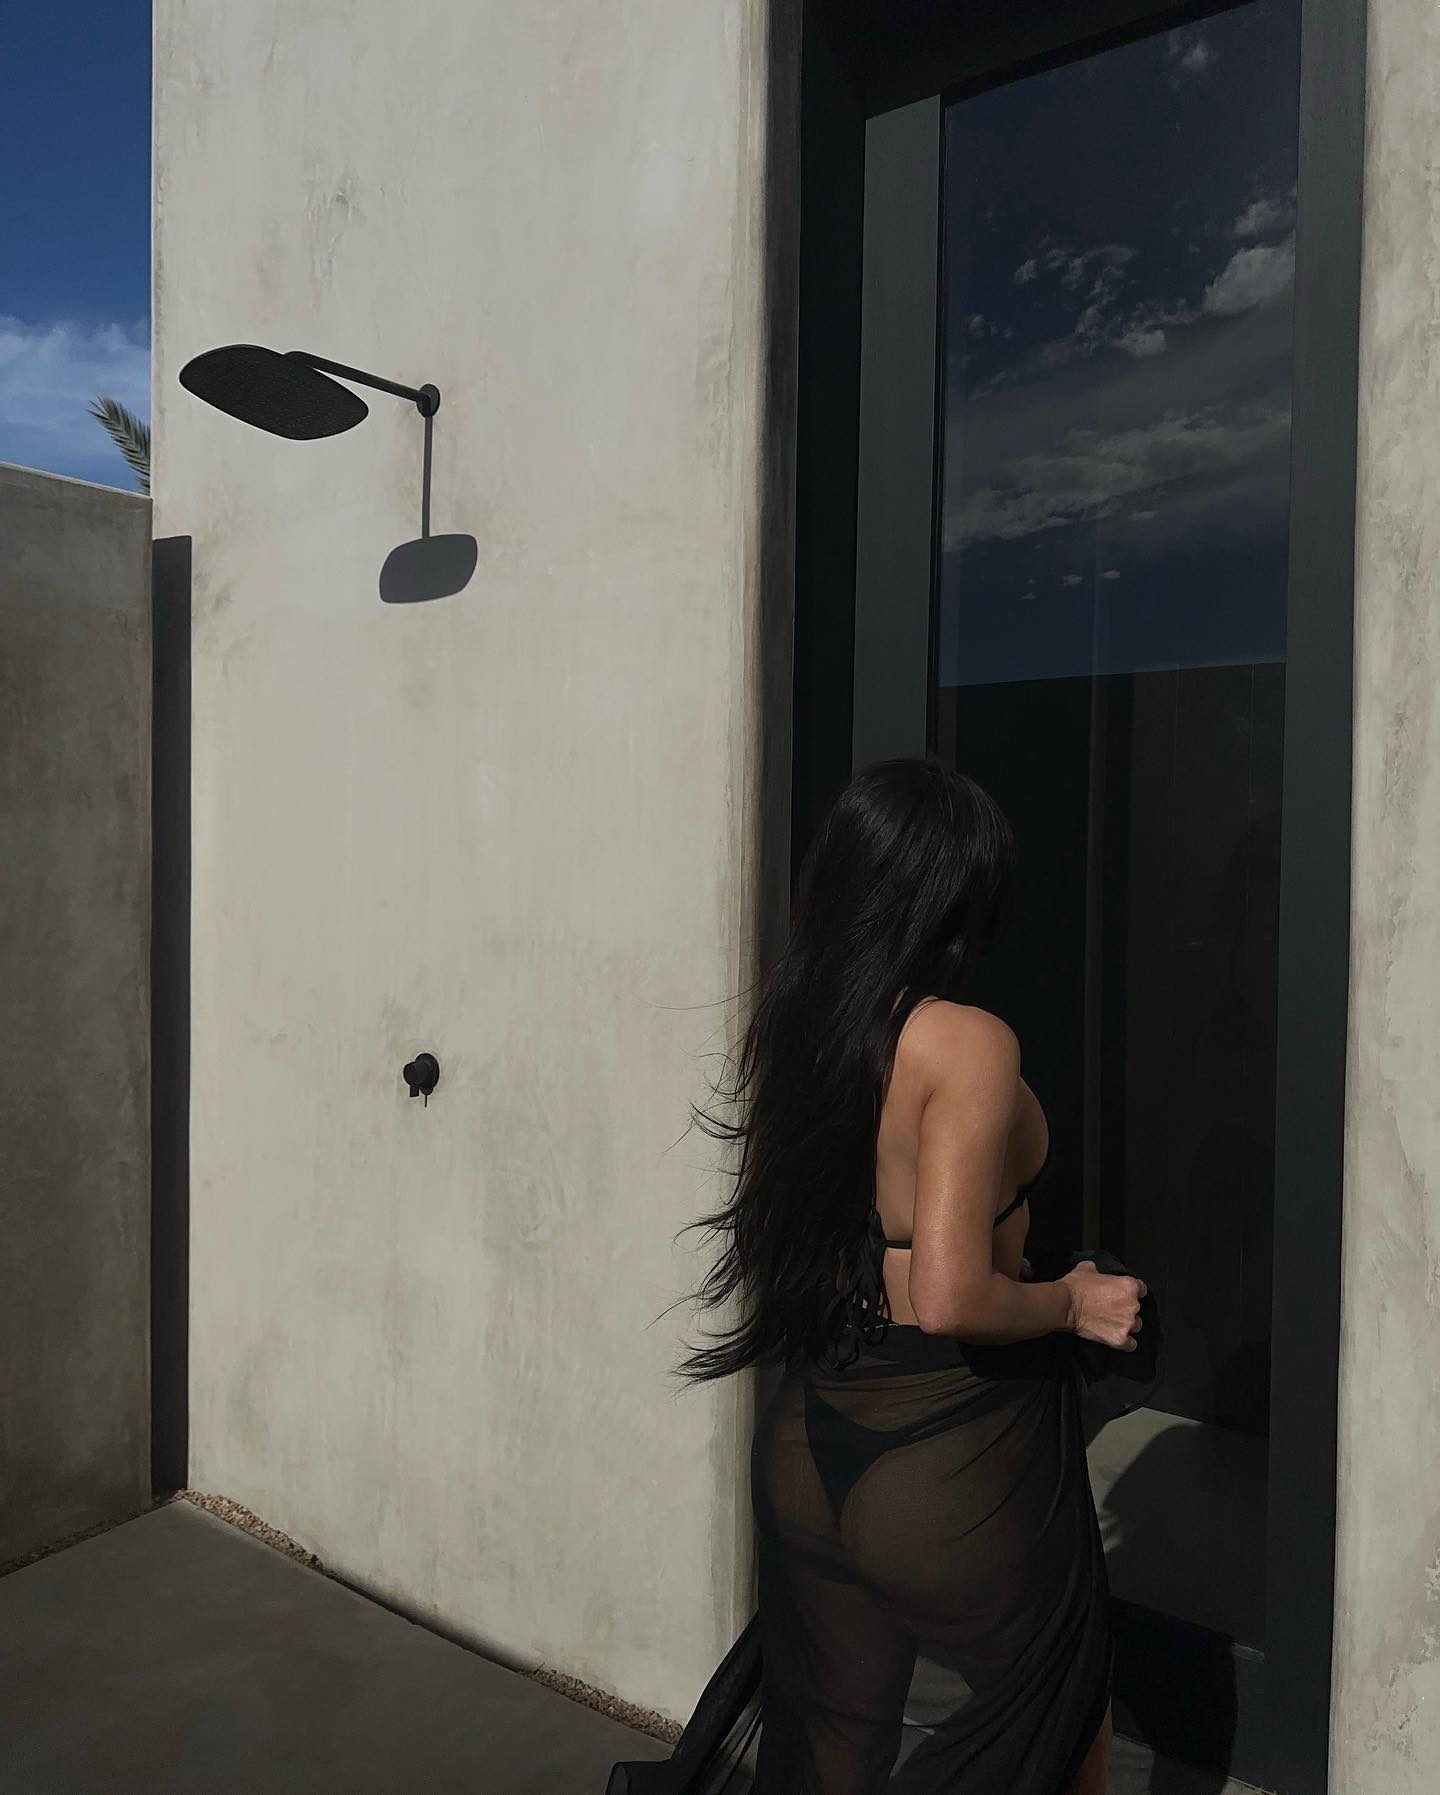 FOTOS Kim y Khloe Kardashian se acercan a las cmaras! - Photo 8